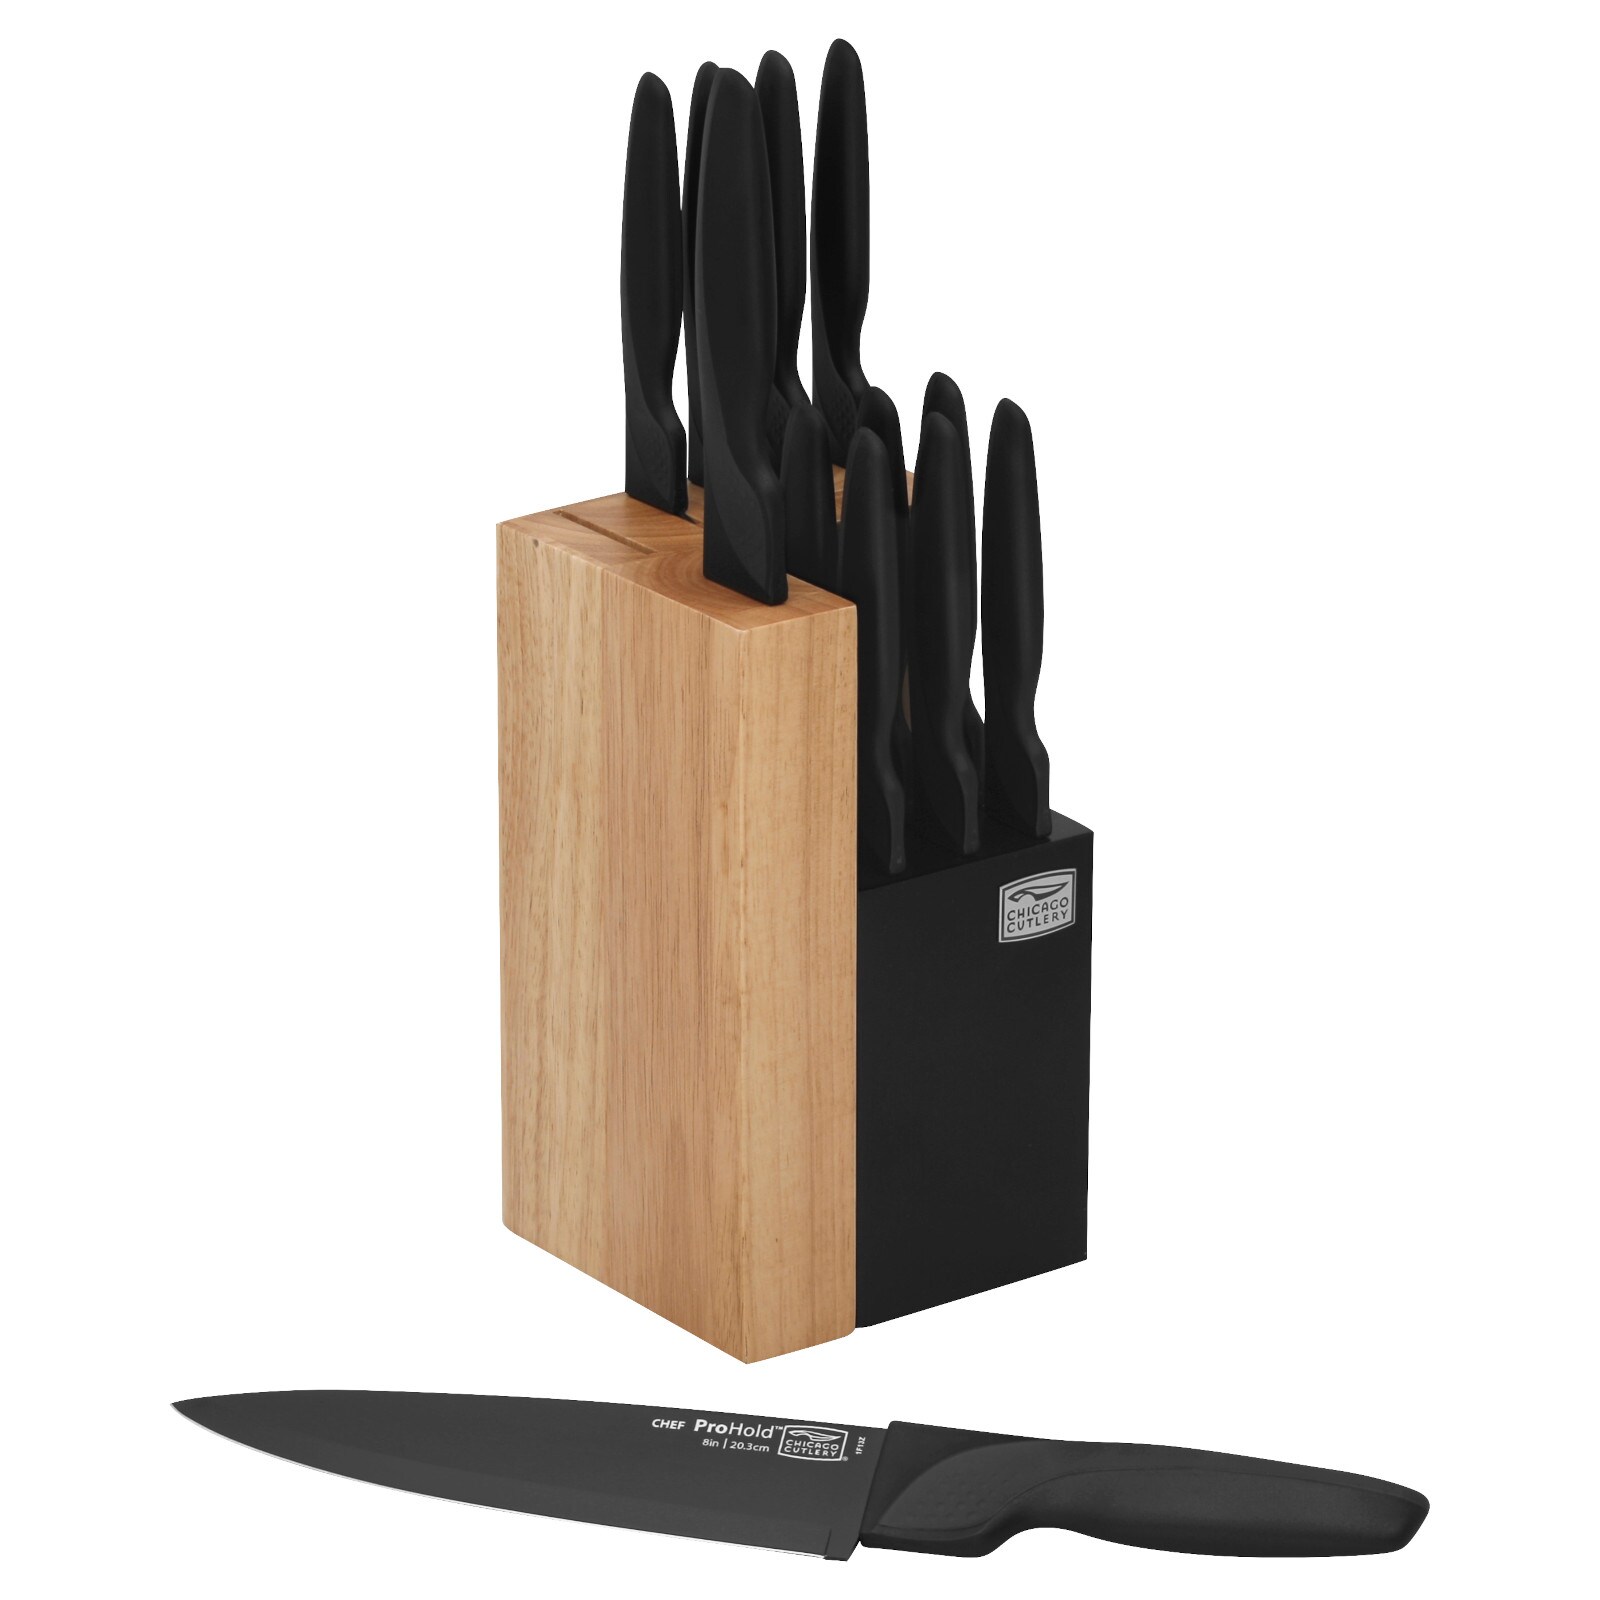 Chicago Cutlery 18pc Insignia Triple Rivet Stainless Steel Knife Block Set  - Black